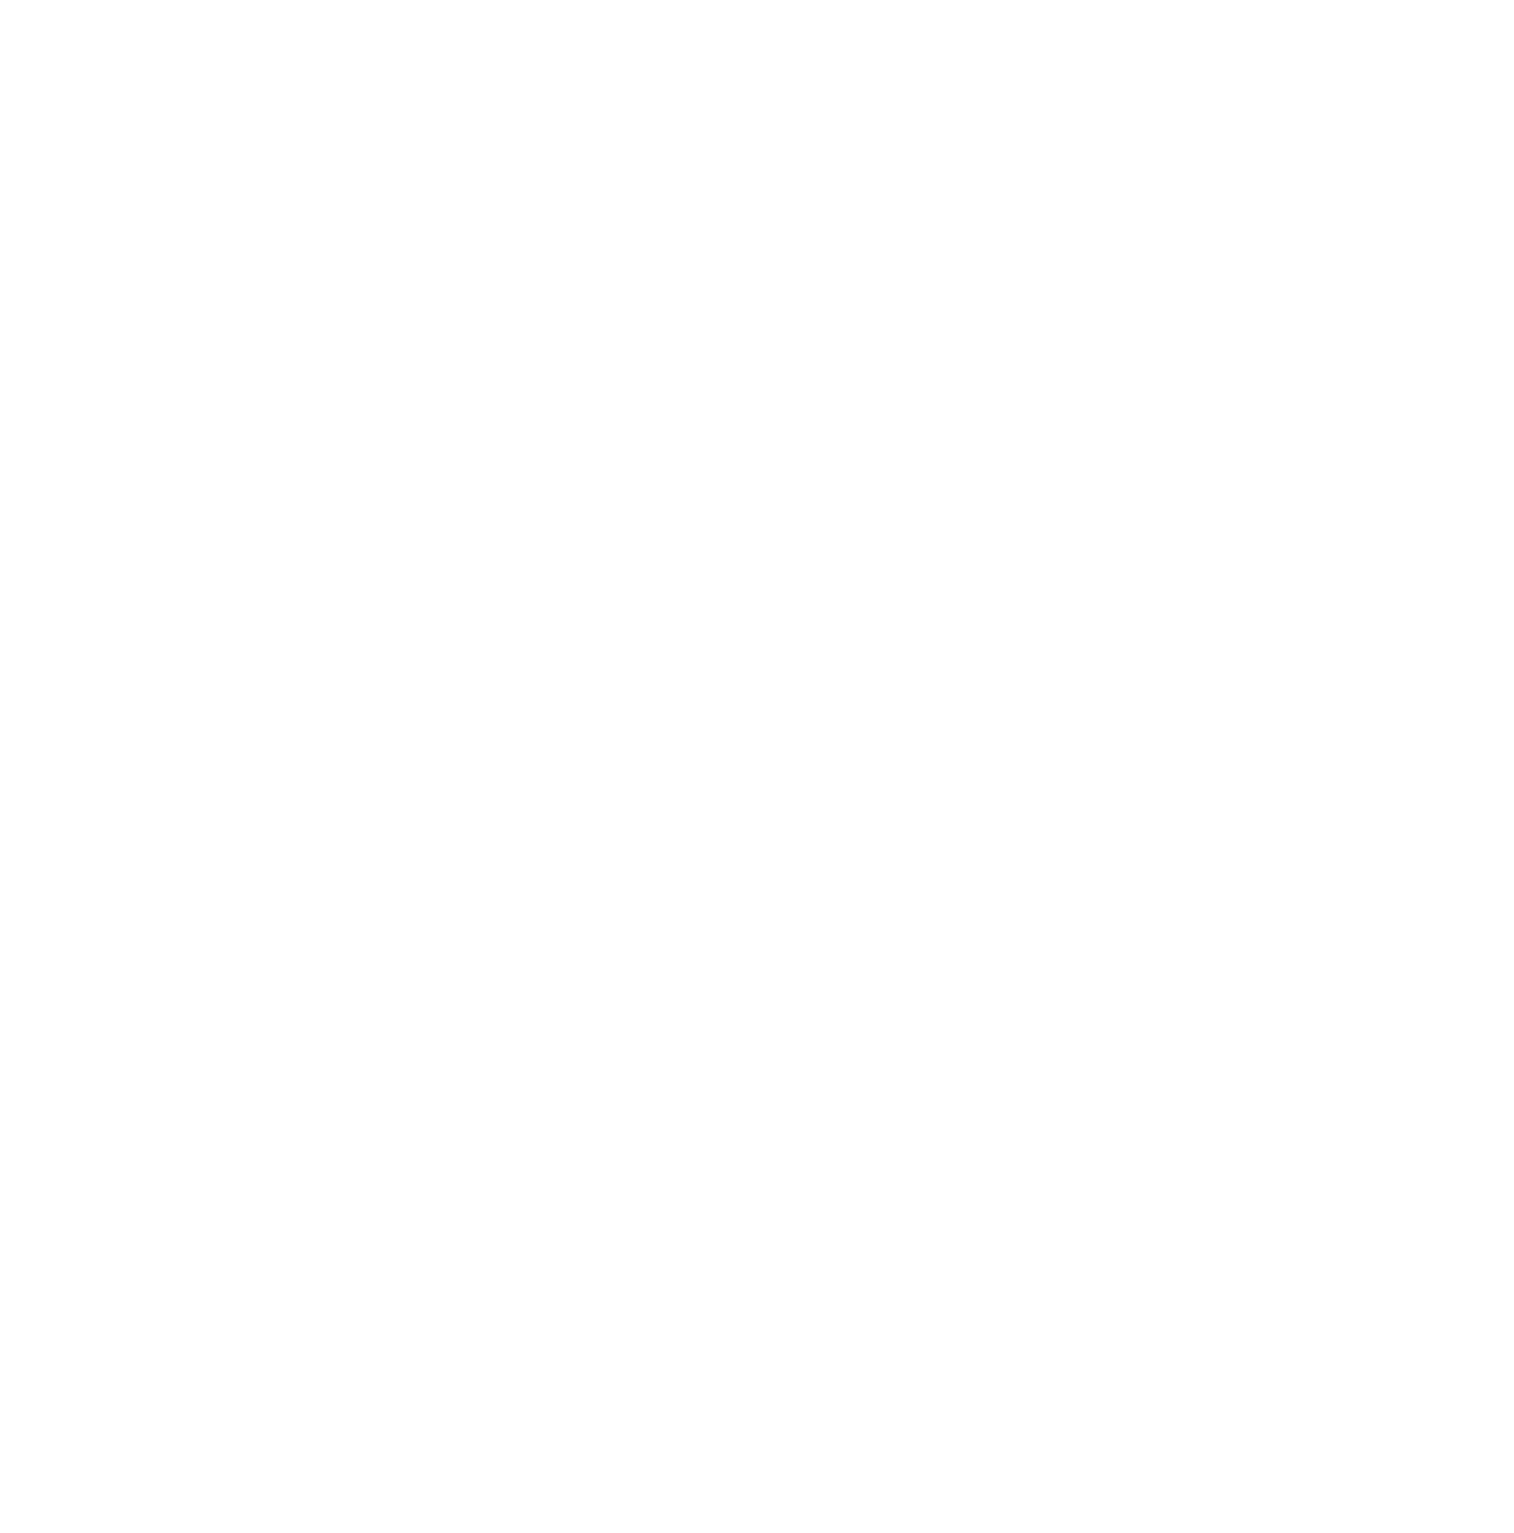 Endeavour Group logo for dark backgrounds (transparent PNG)